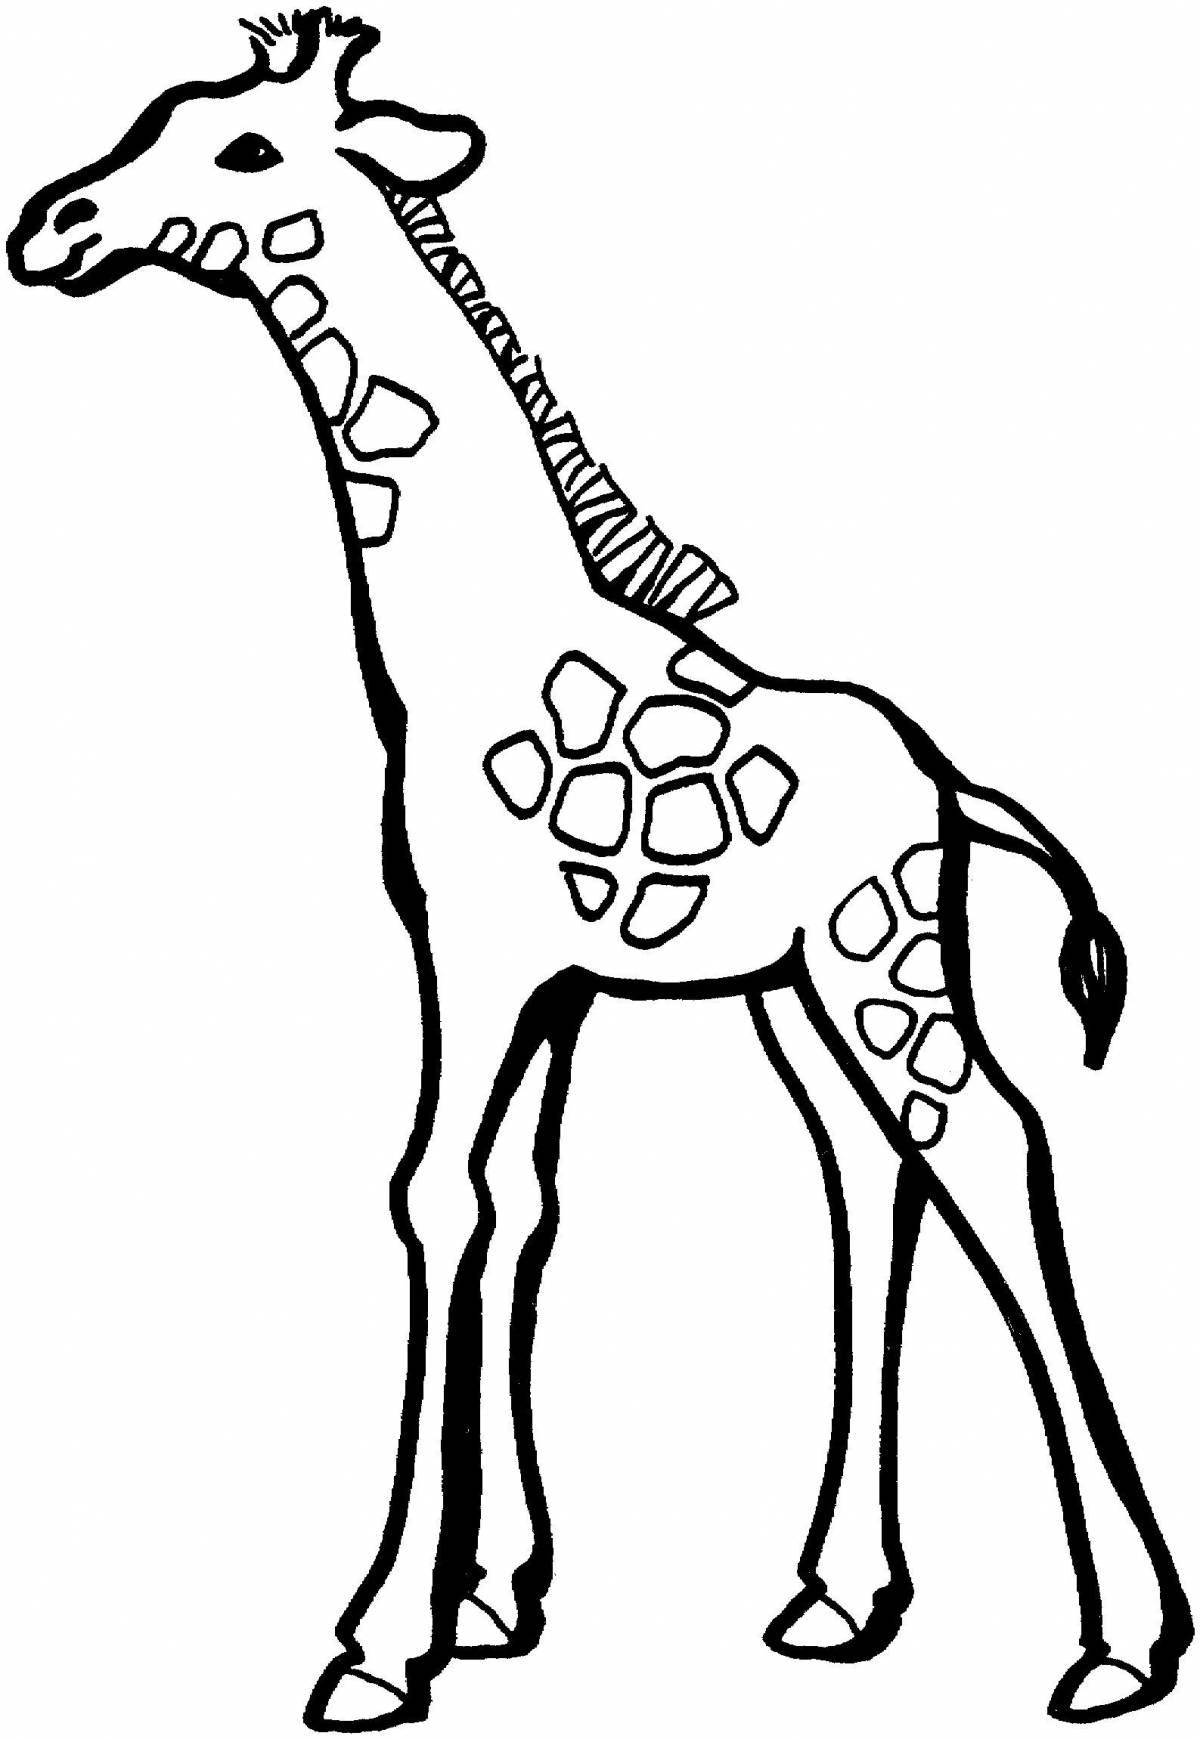 Яркий рисунок жирафа для детей